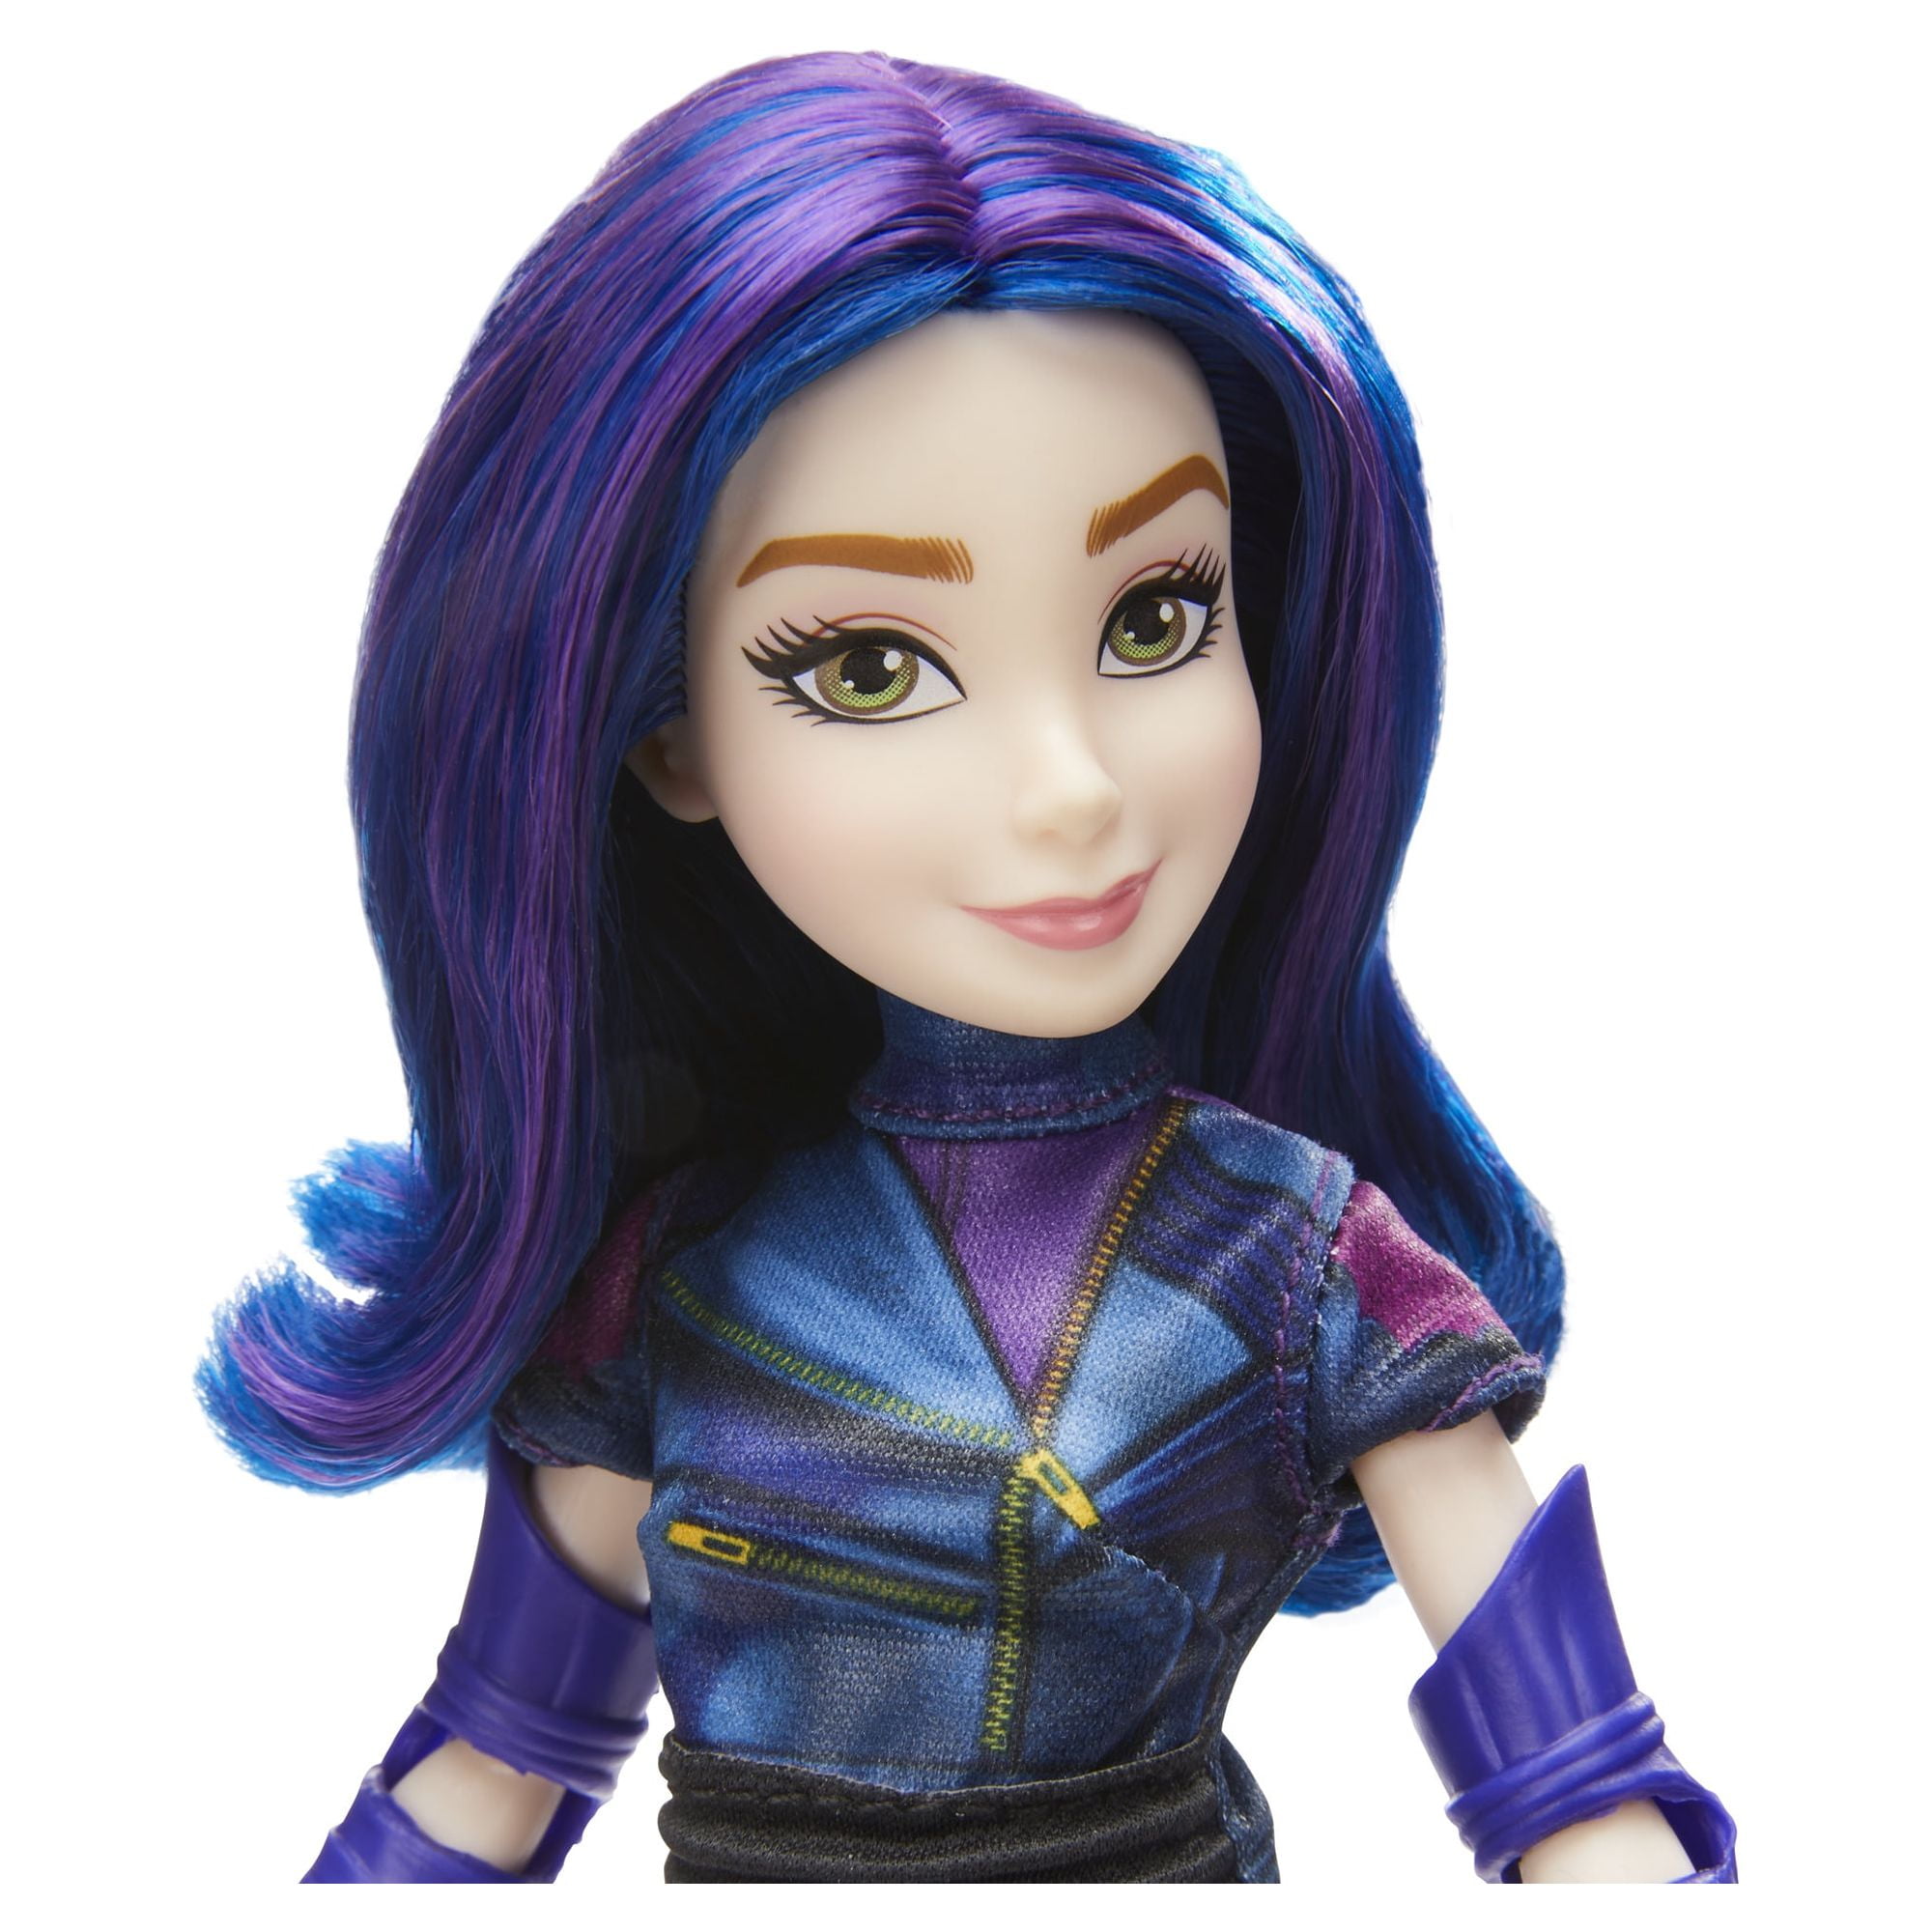 Disney toy Descendants Mal Doll, Inspired by Disney's Descendants